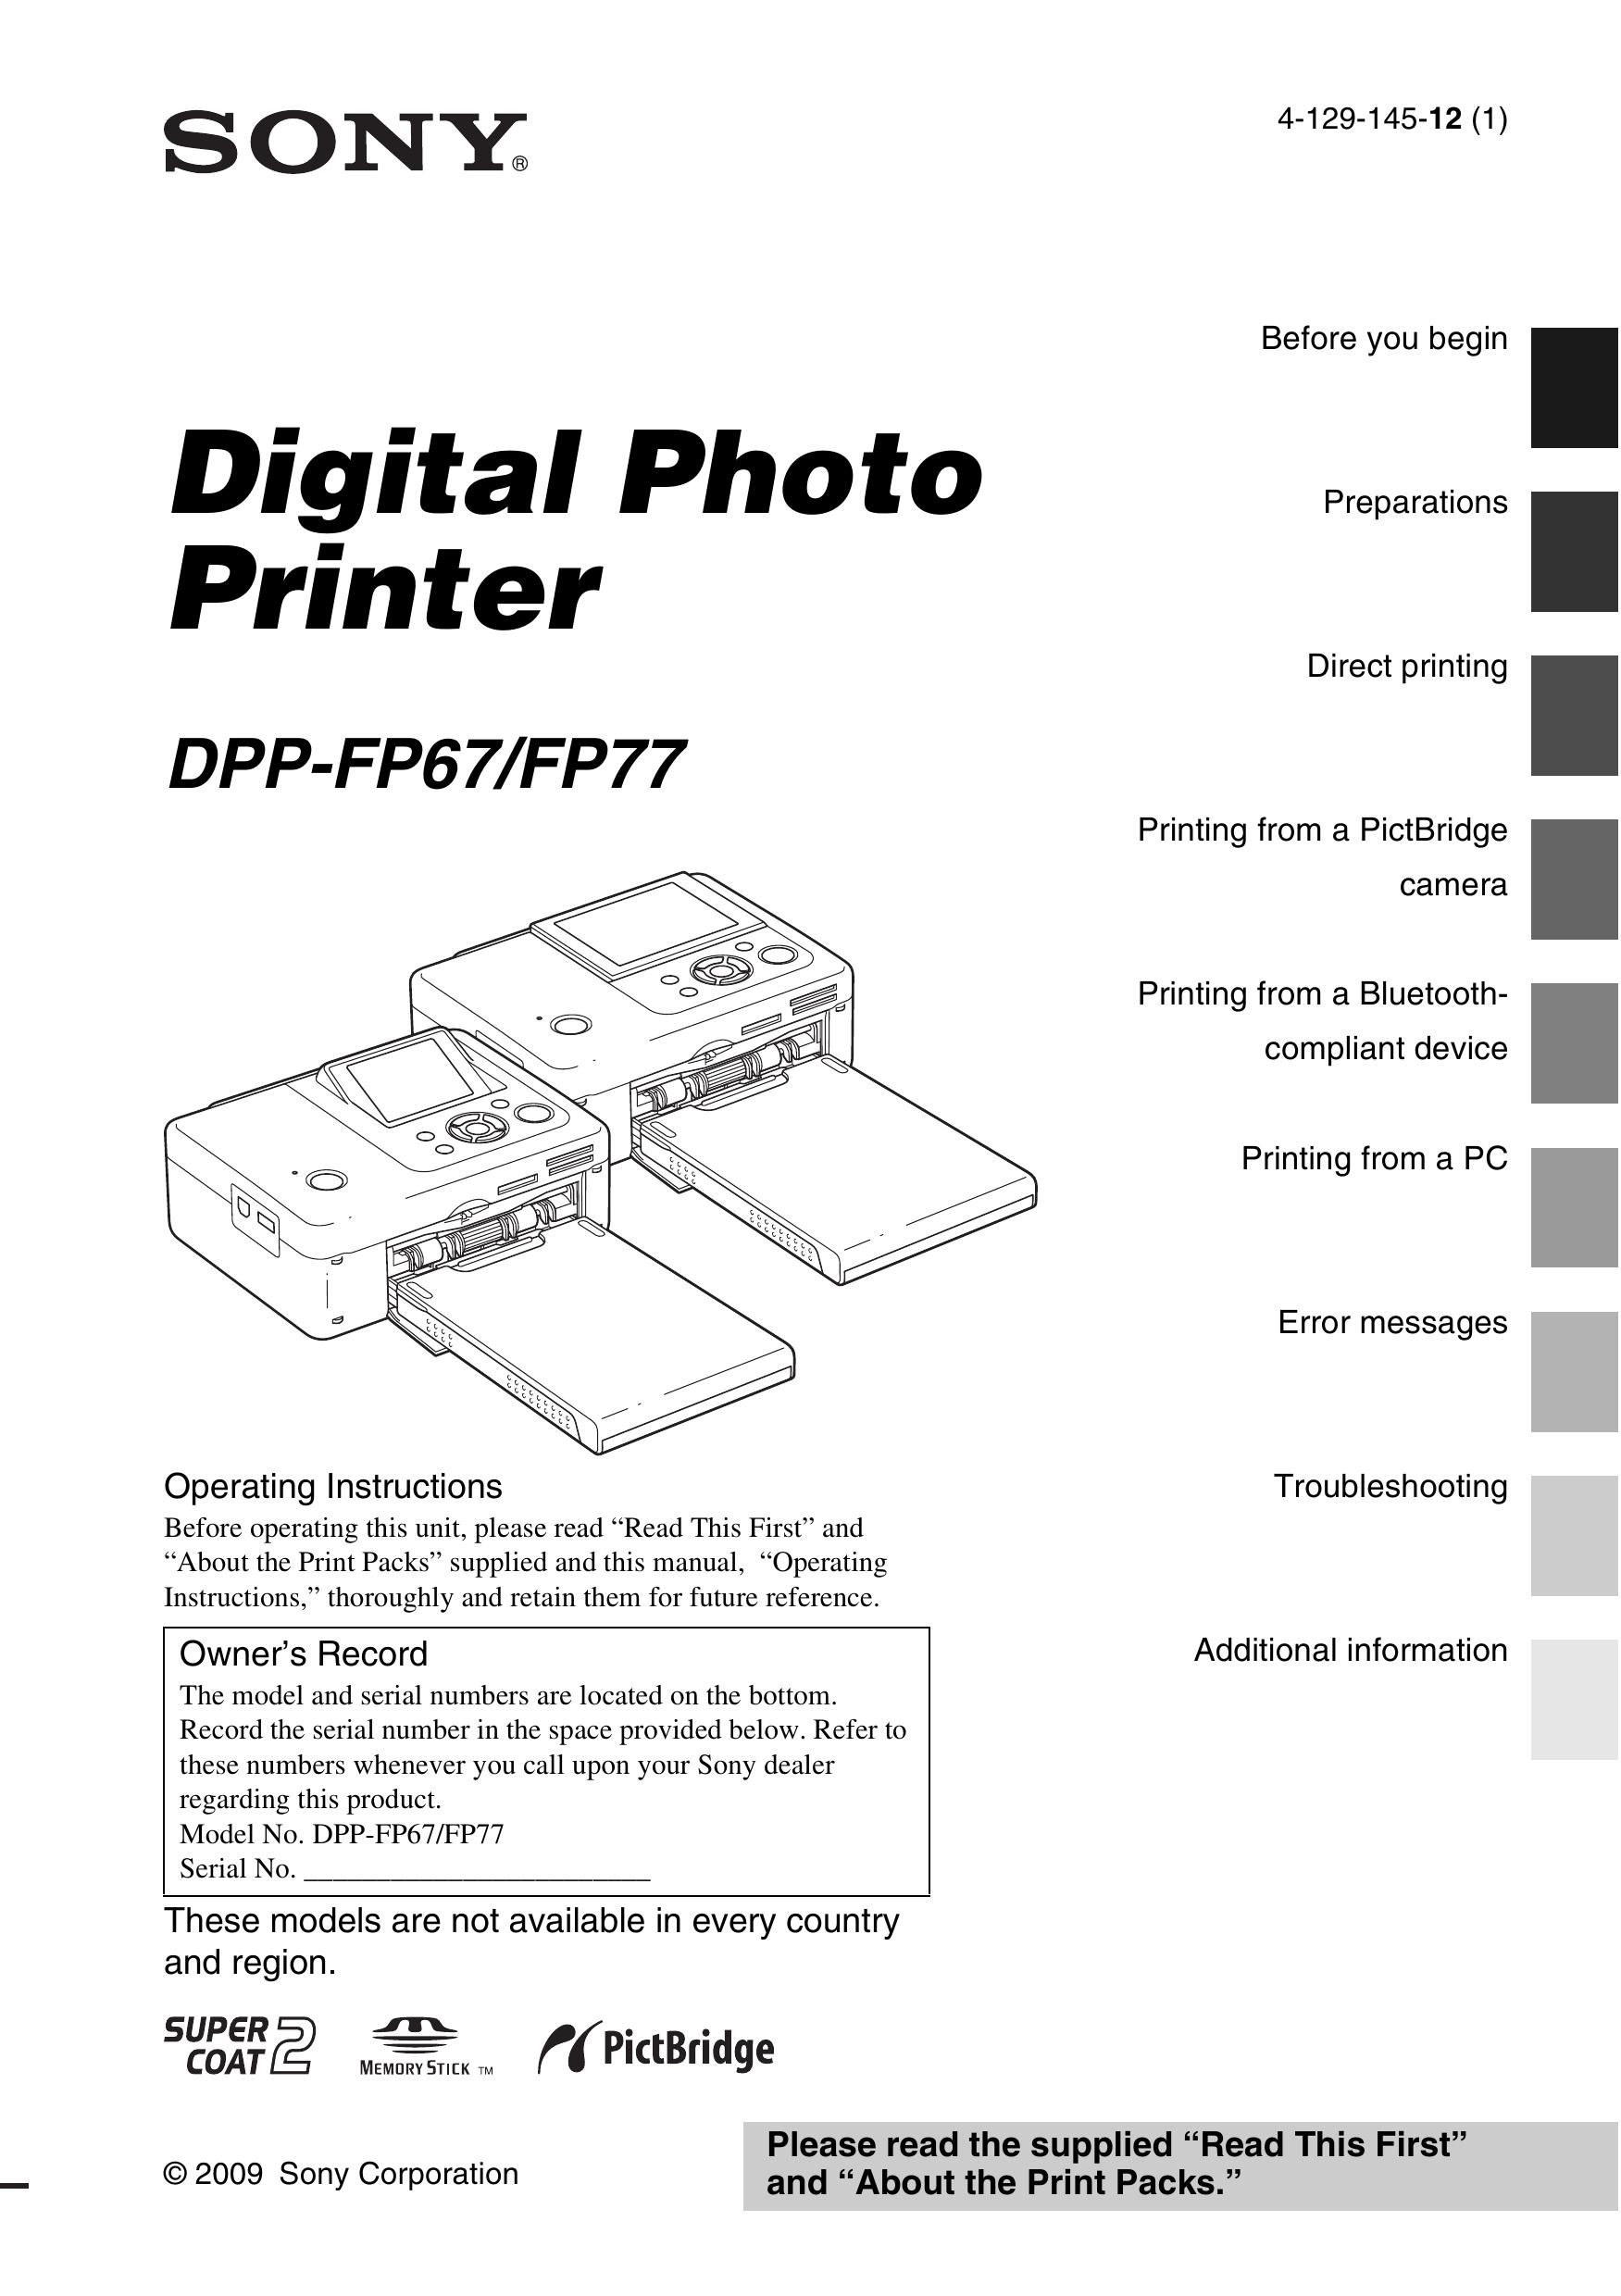 Sony DPP-FP67 Photo Printer User Manual